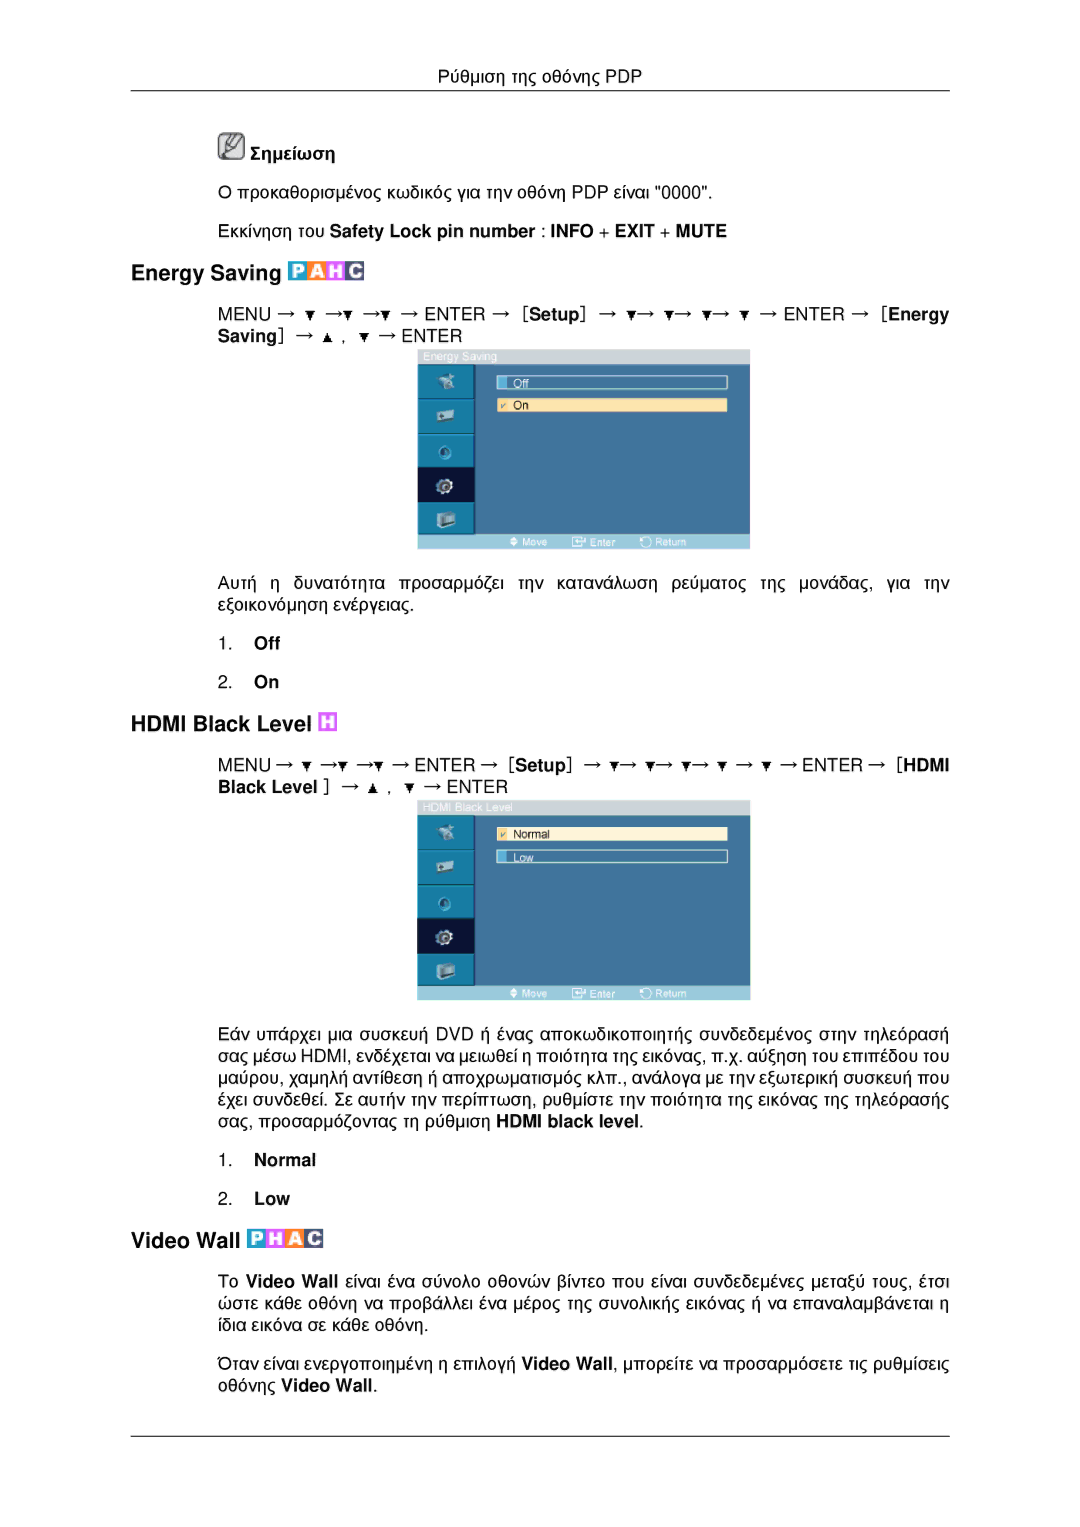 Samsung PH42KPPLBC/EN manual Energy Saving, Hdmi Black Level, Video Wall, Normal Low 